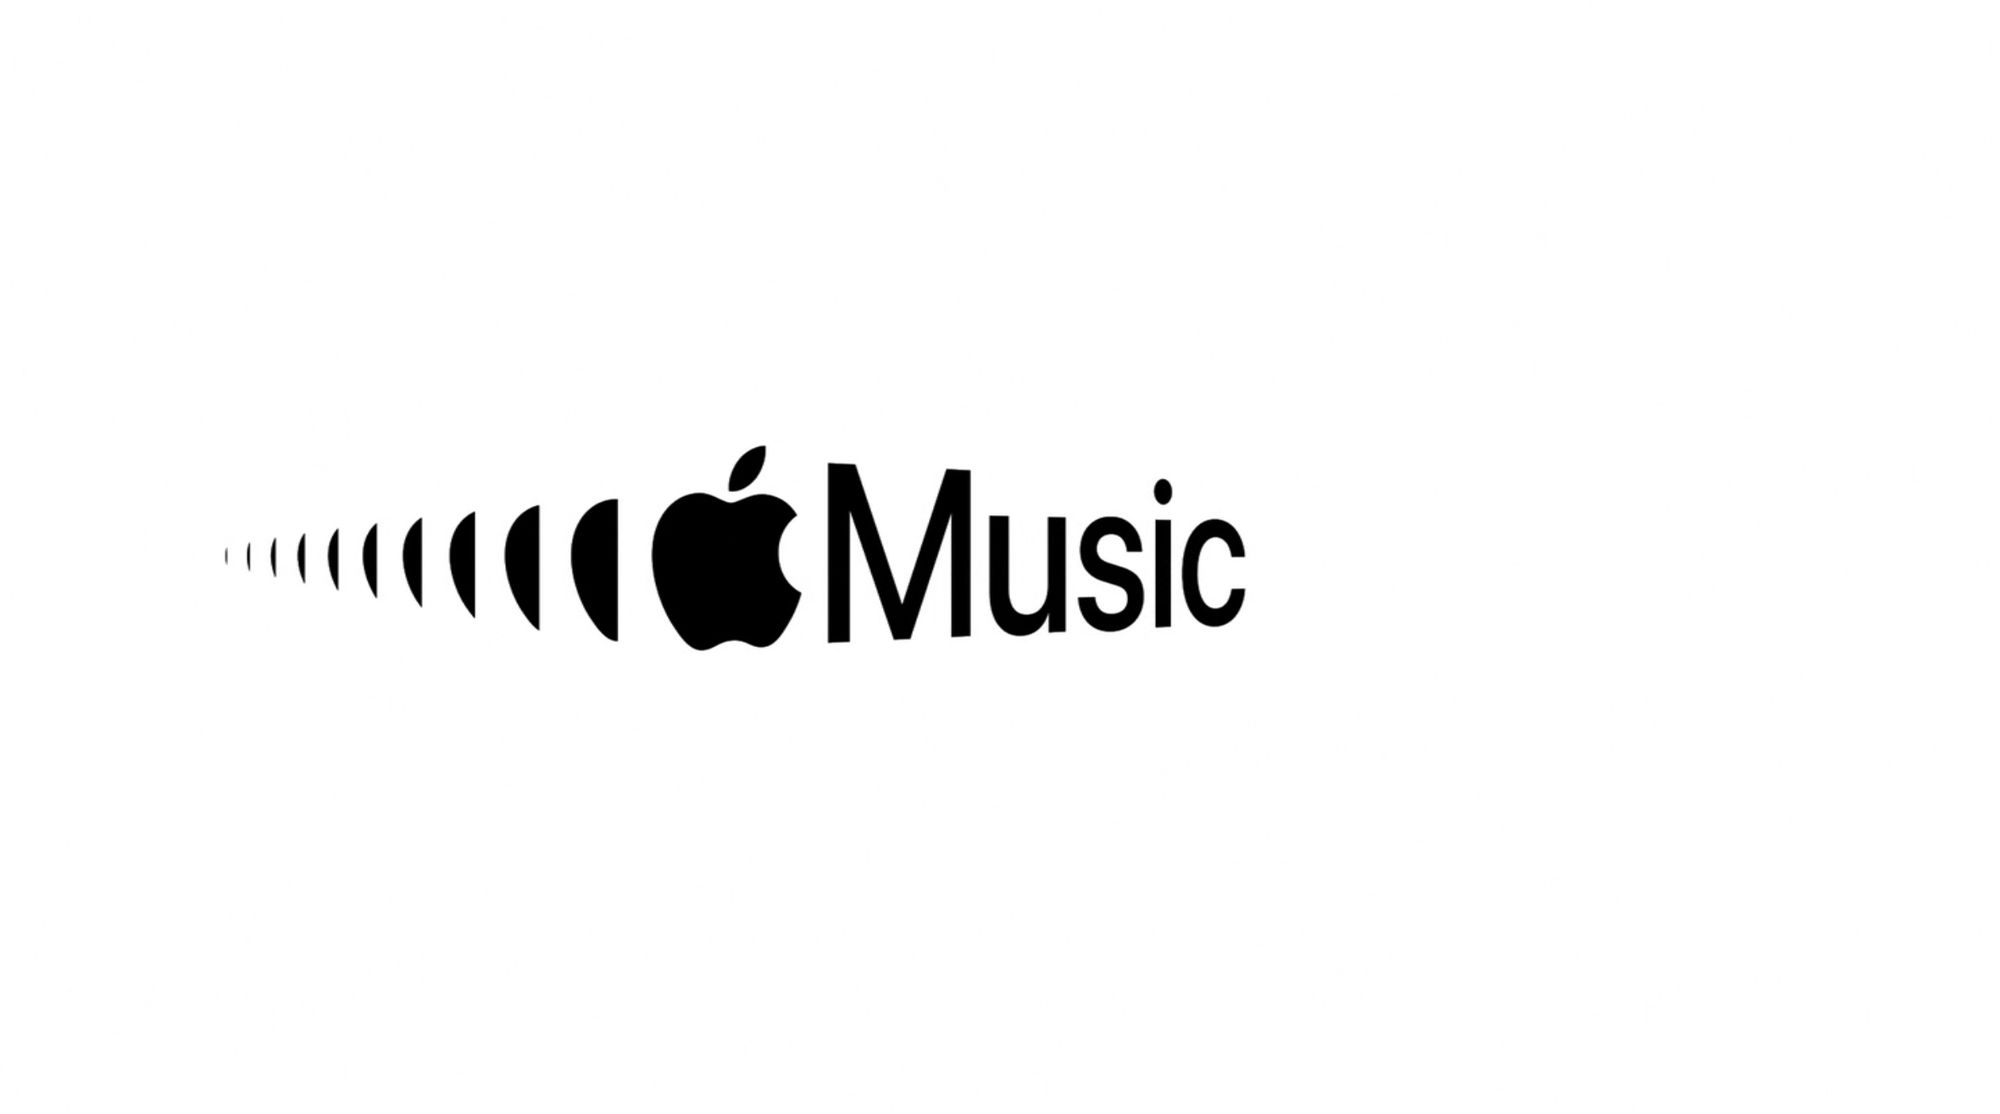 “Prepara-te” - Apple anuncia grande novidade do Apple Music para breve